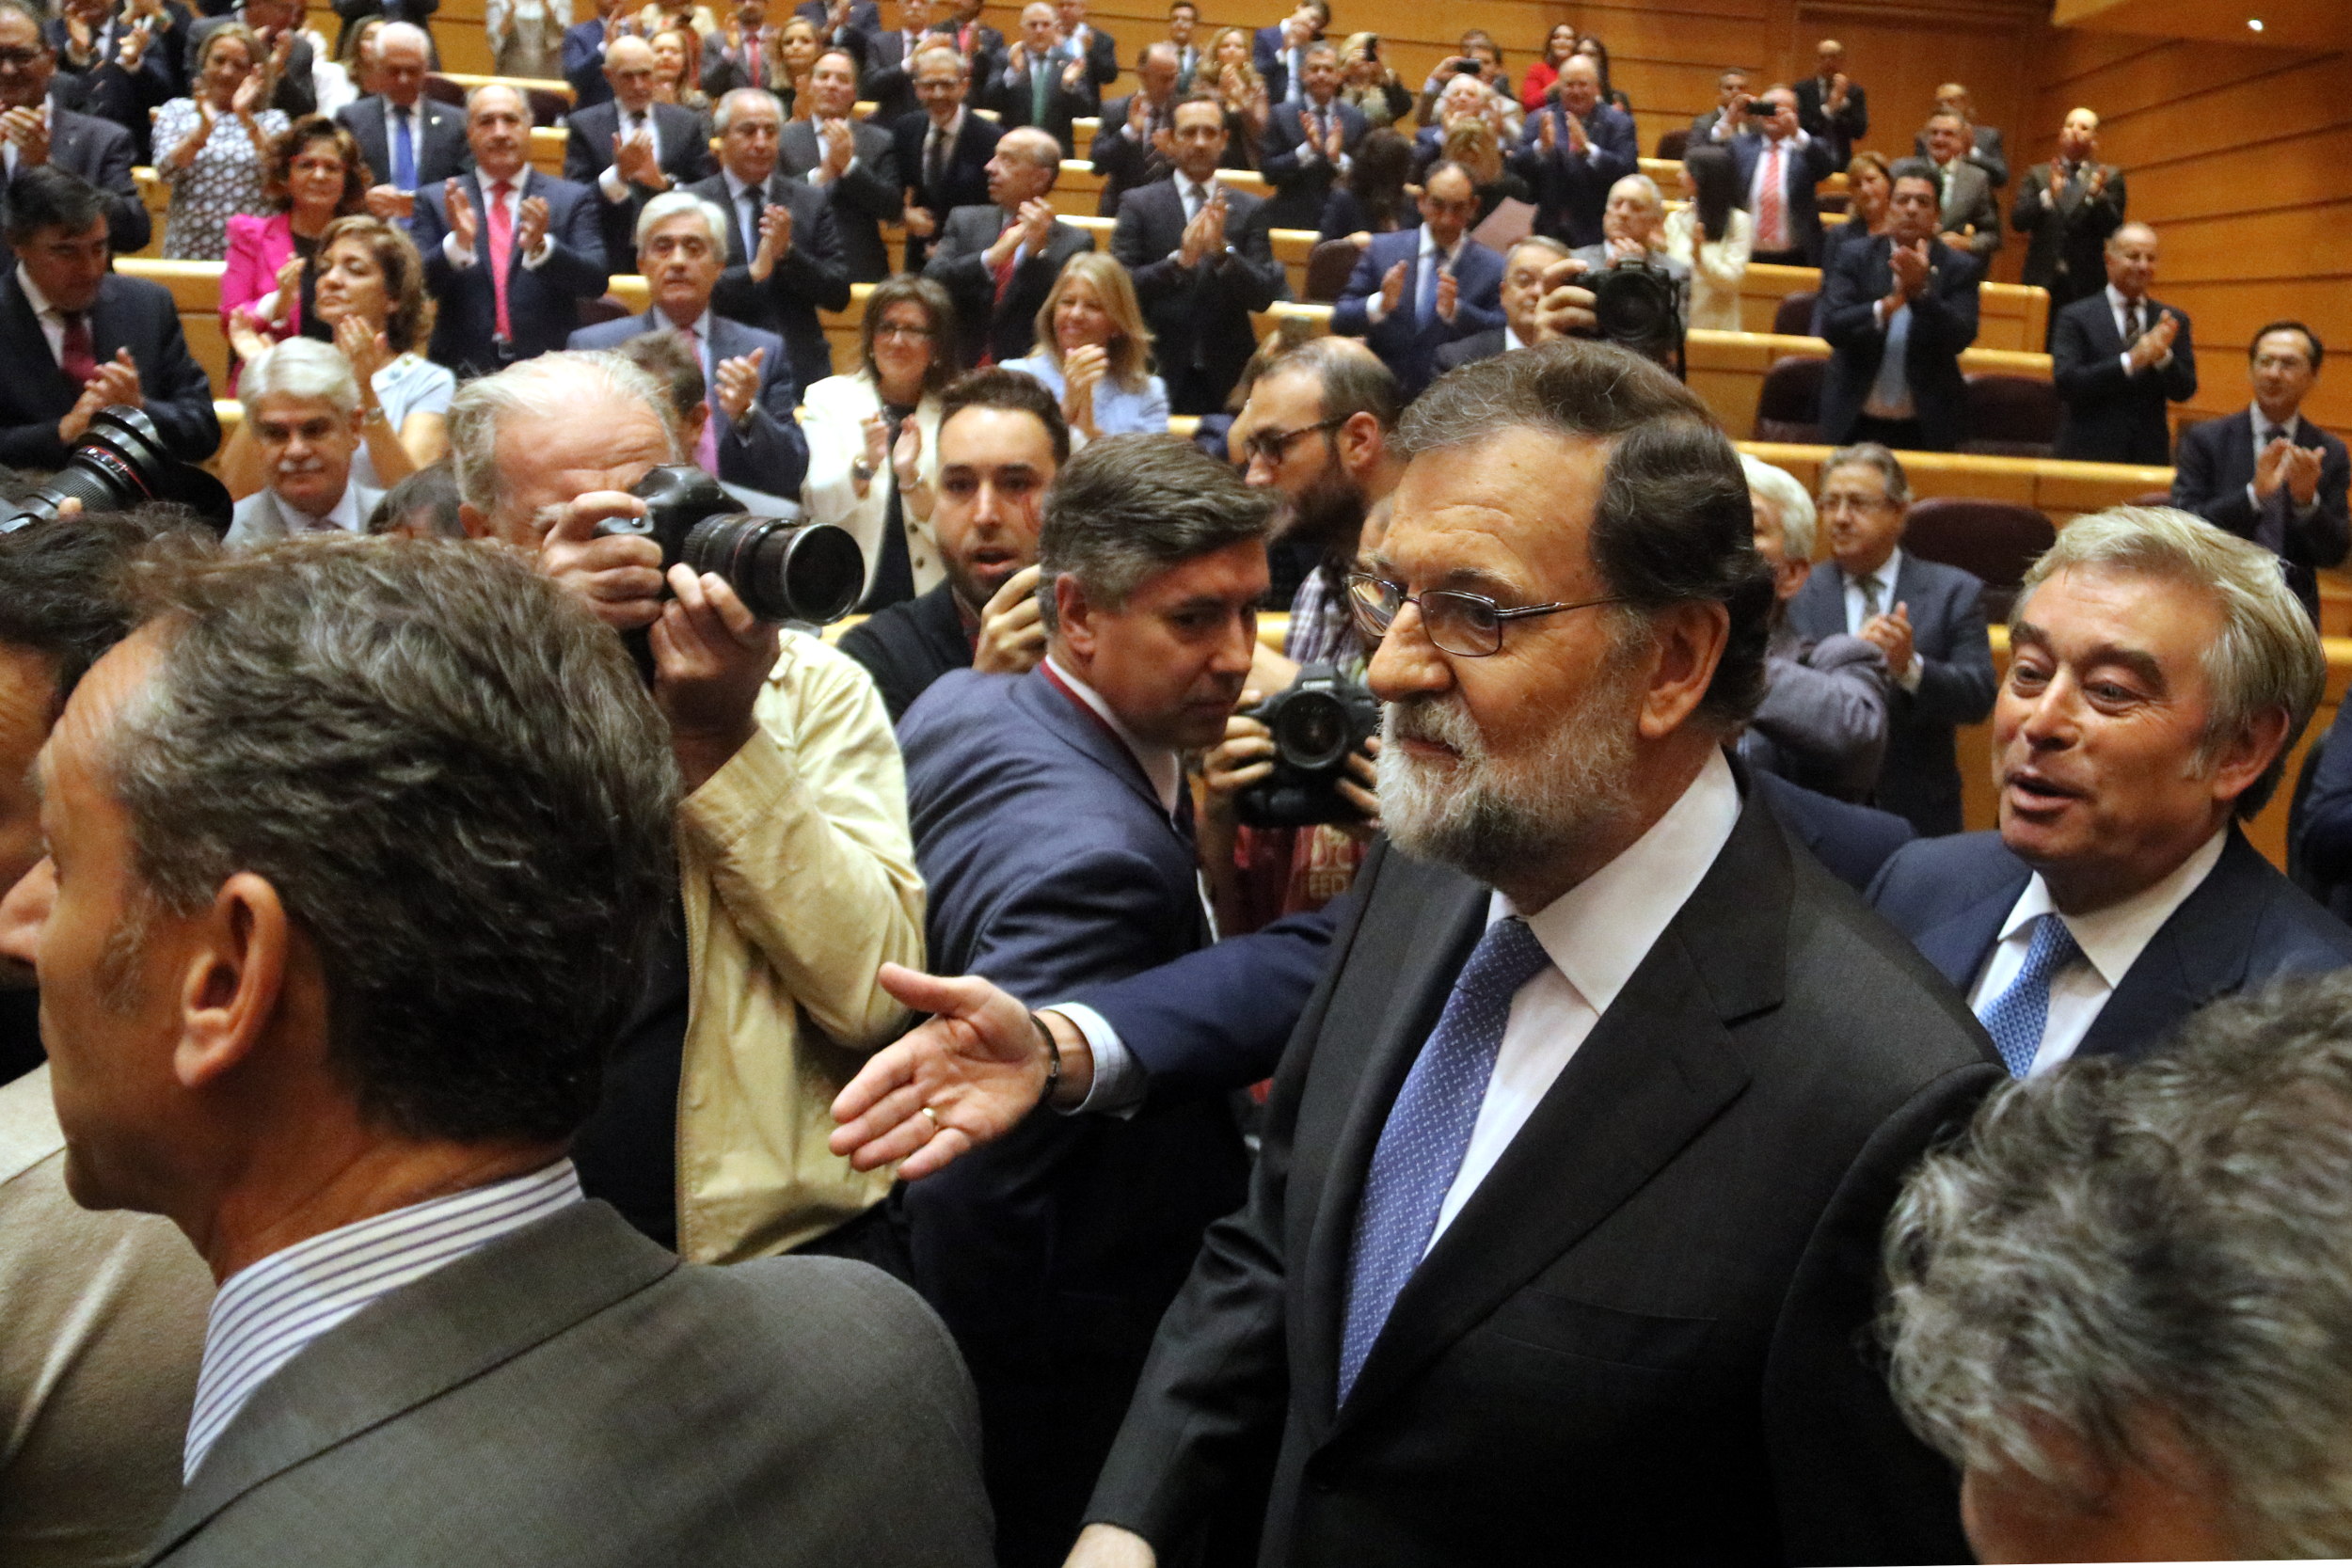 Spanish president Mariano Rajoy at the Senate (by Tània Tàpia)